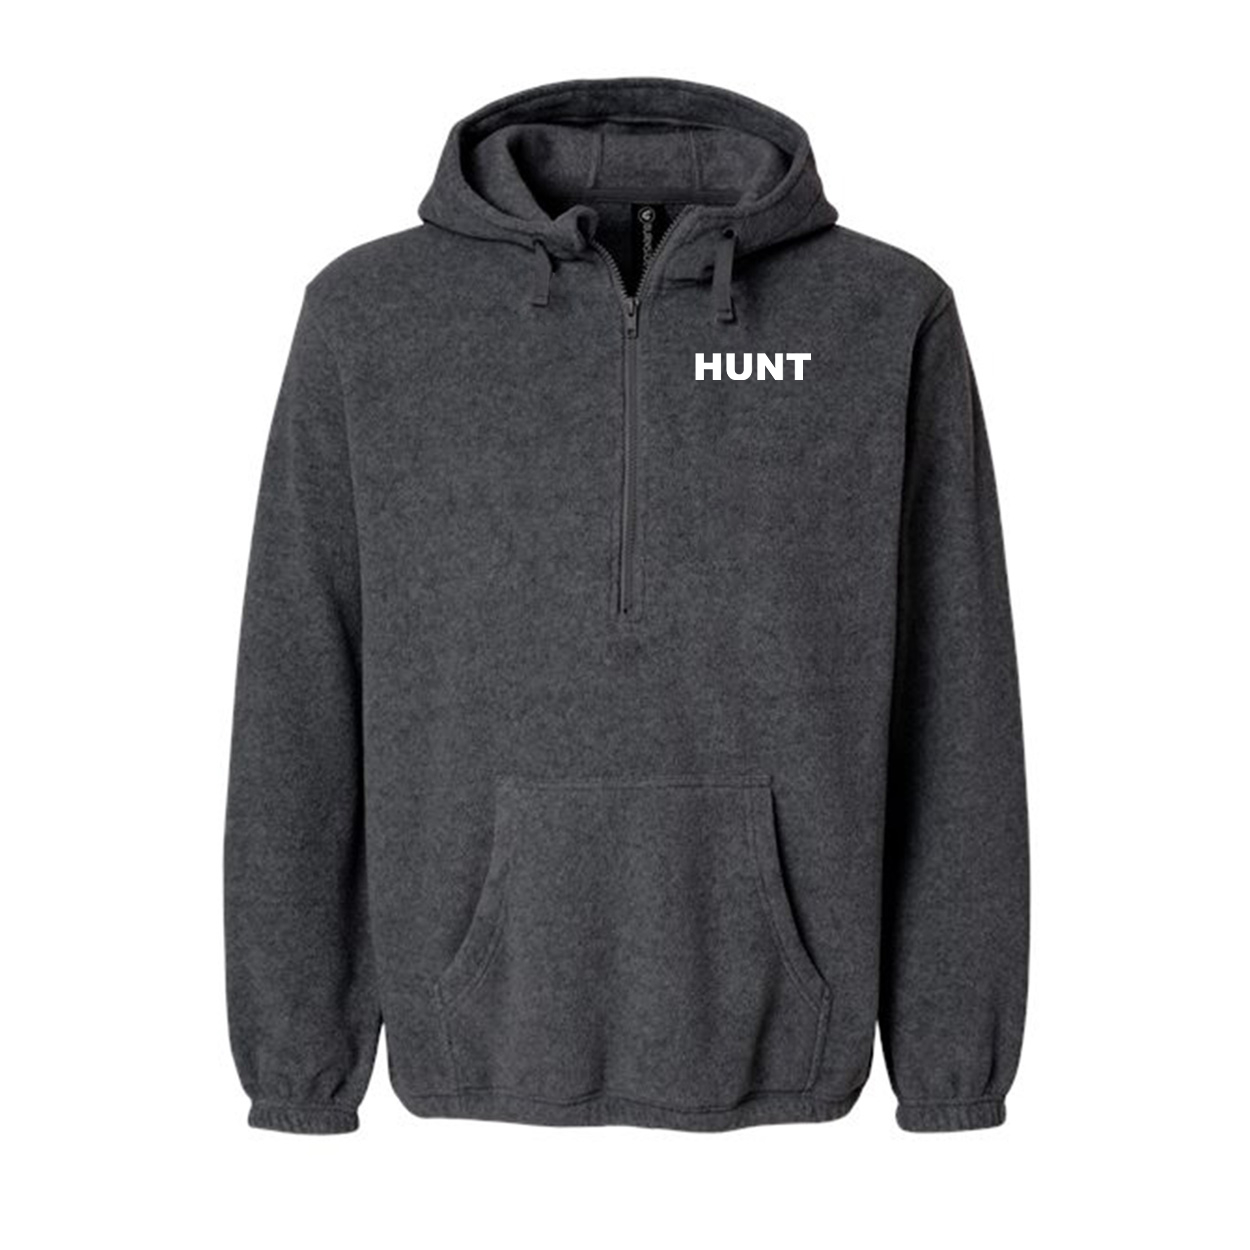 Hunt Brand Logo Night Out Quarter Zip Fleece Sweatshirt Sweatshirt Heather Charcoal (White Logo)